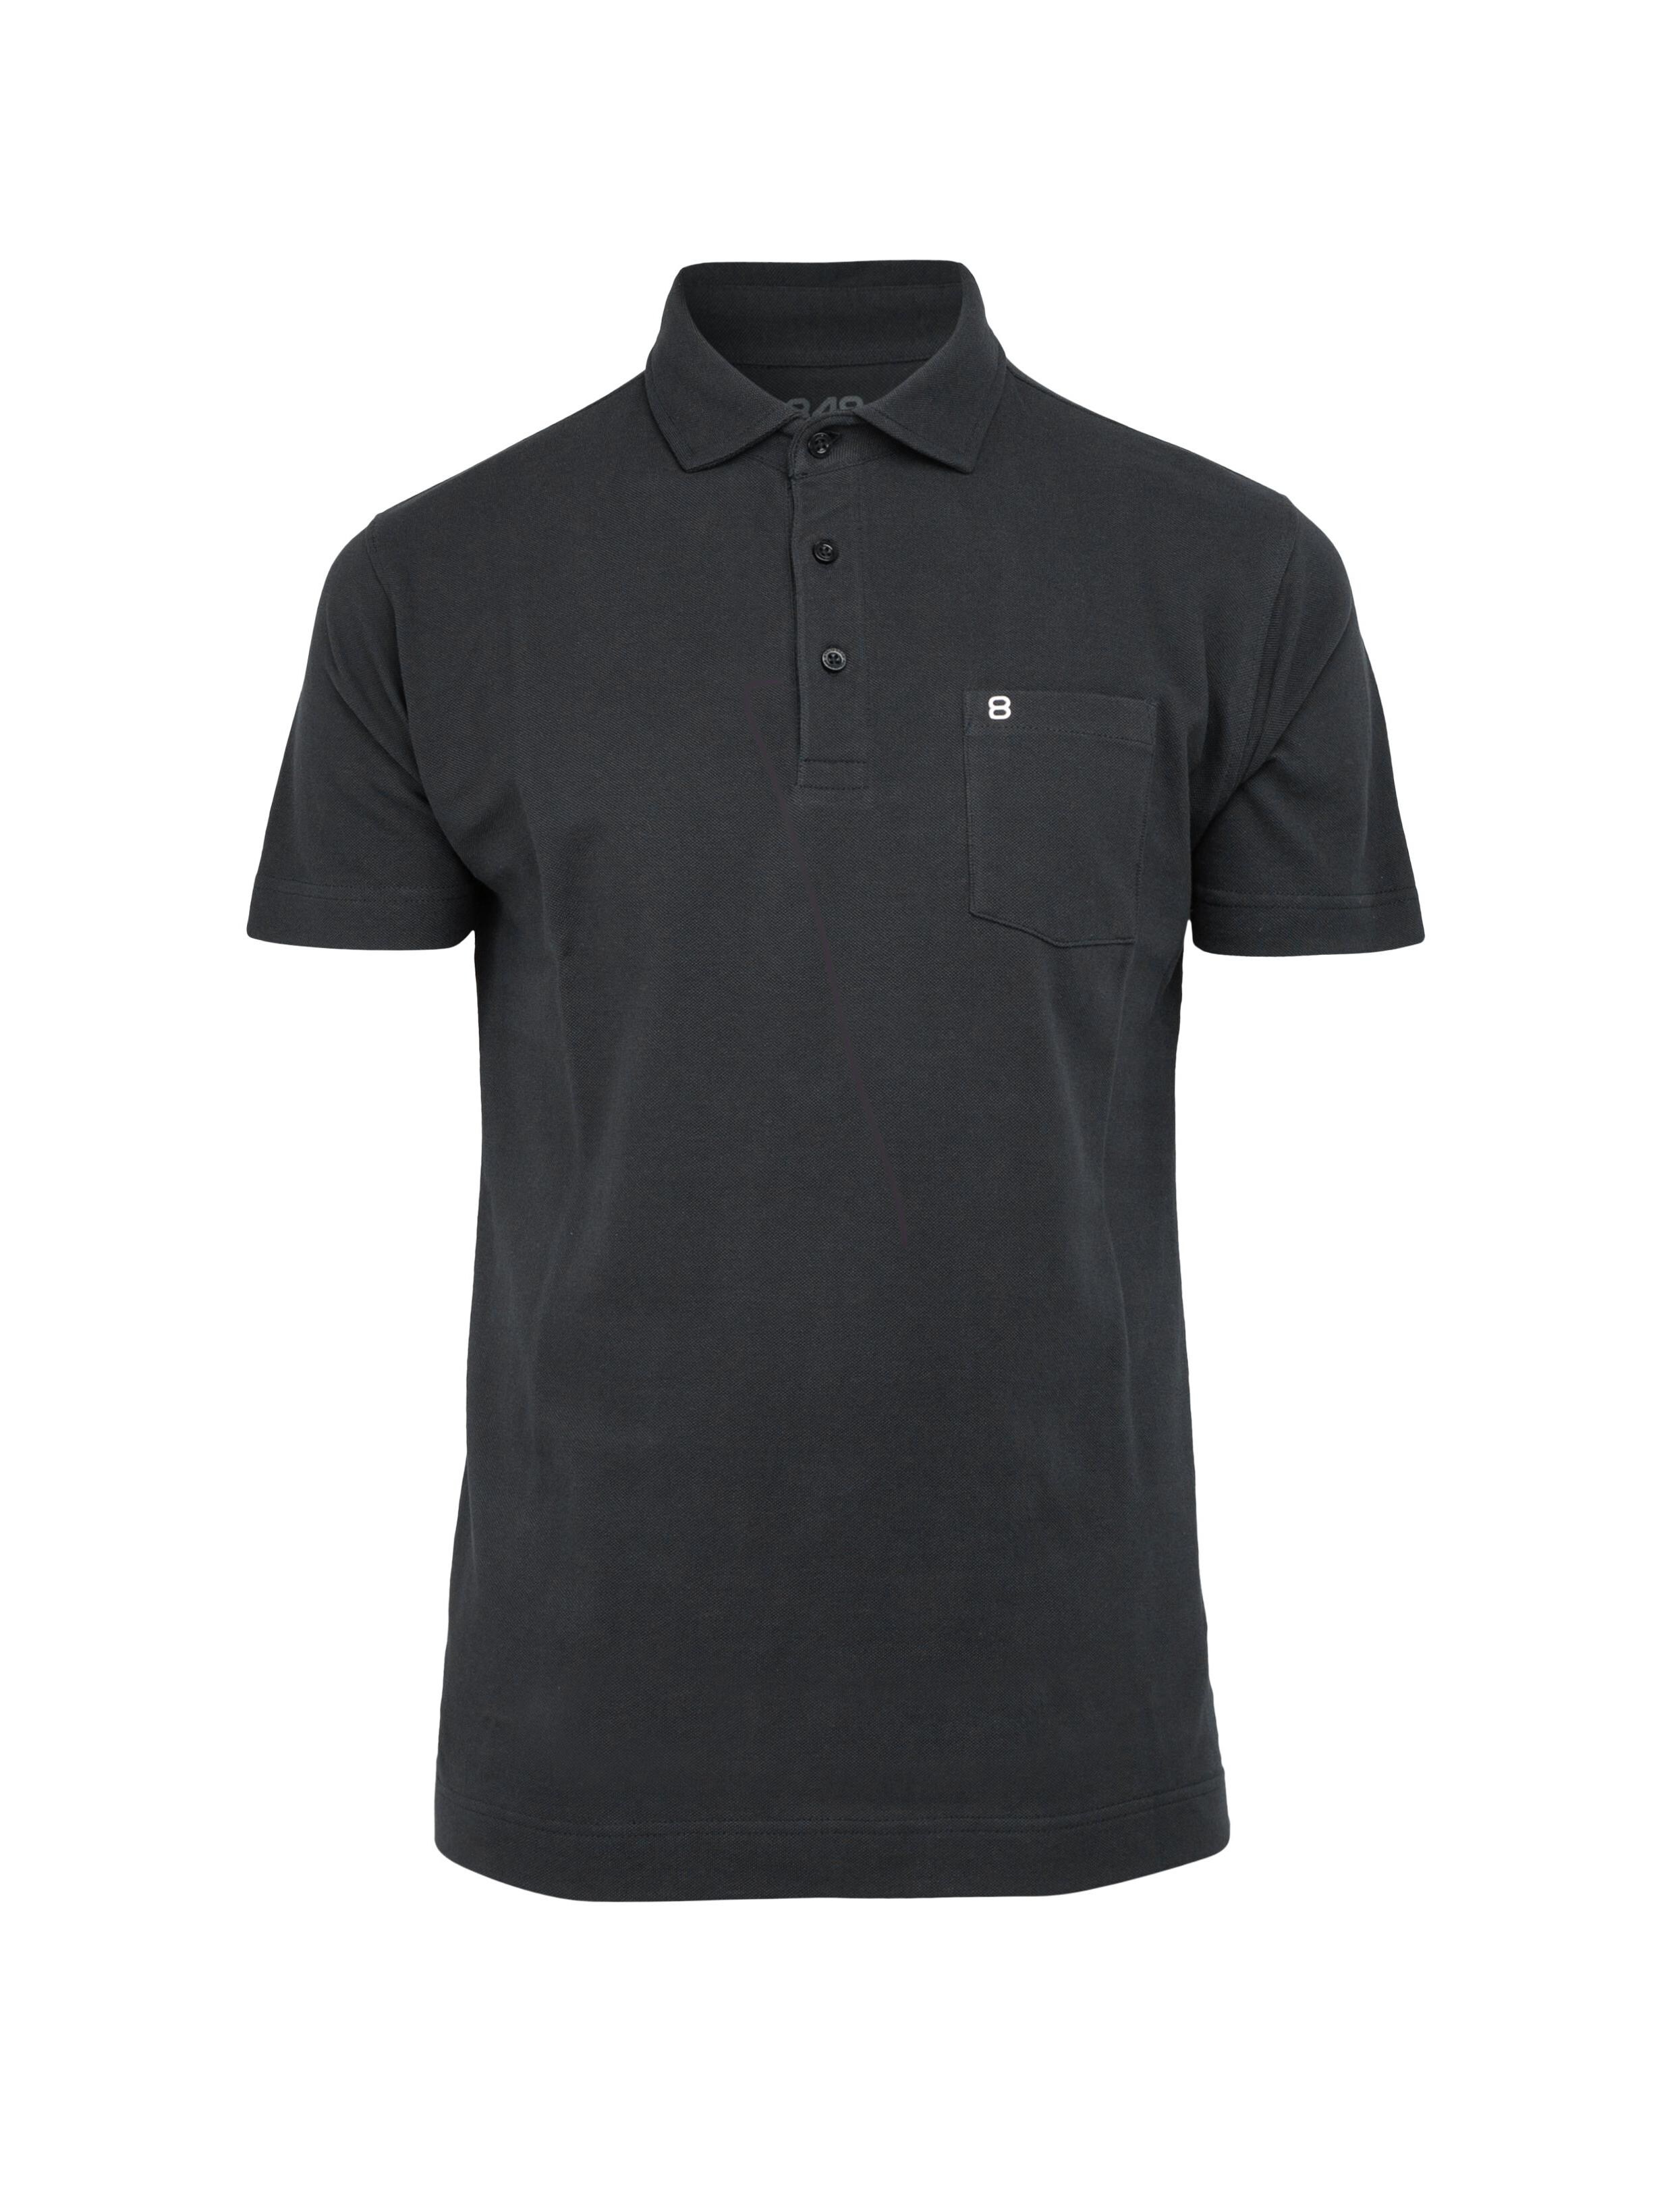 Tersus Polo Shirt Black - Black polo shirt men